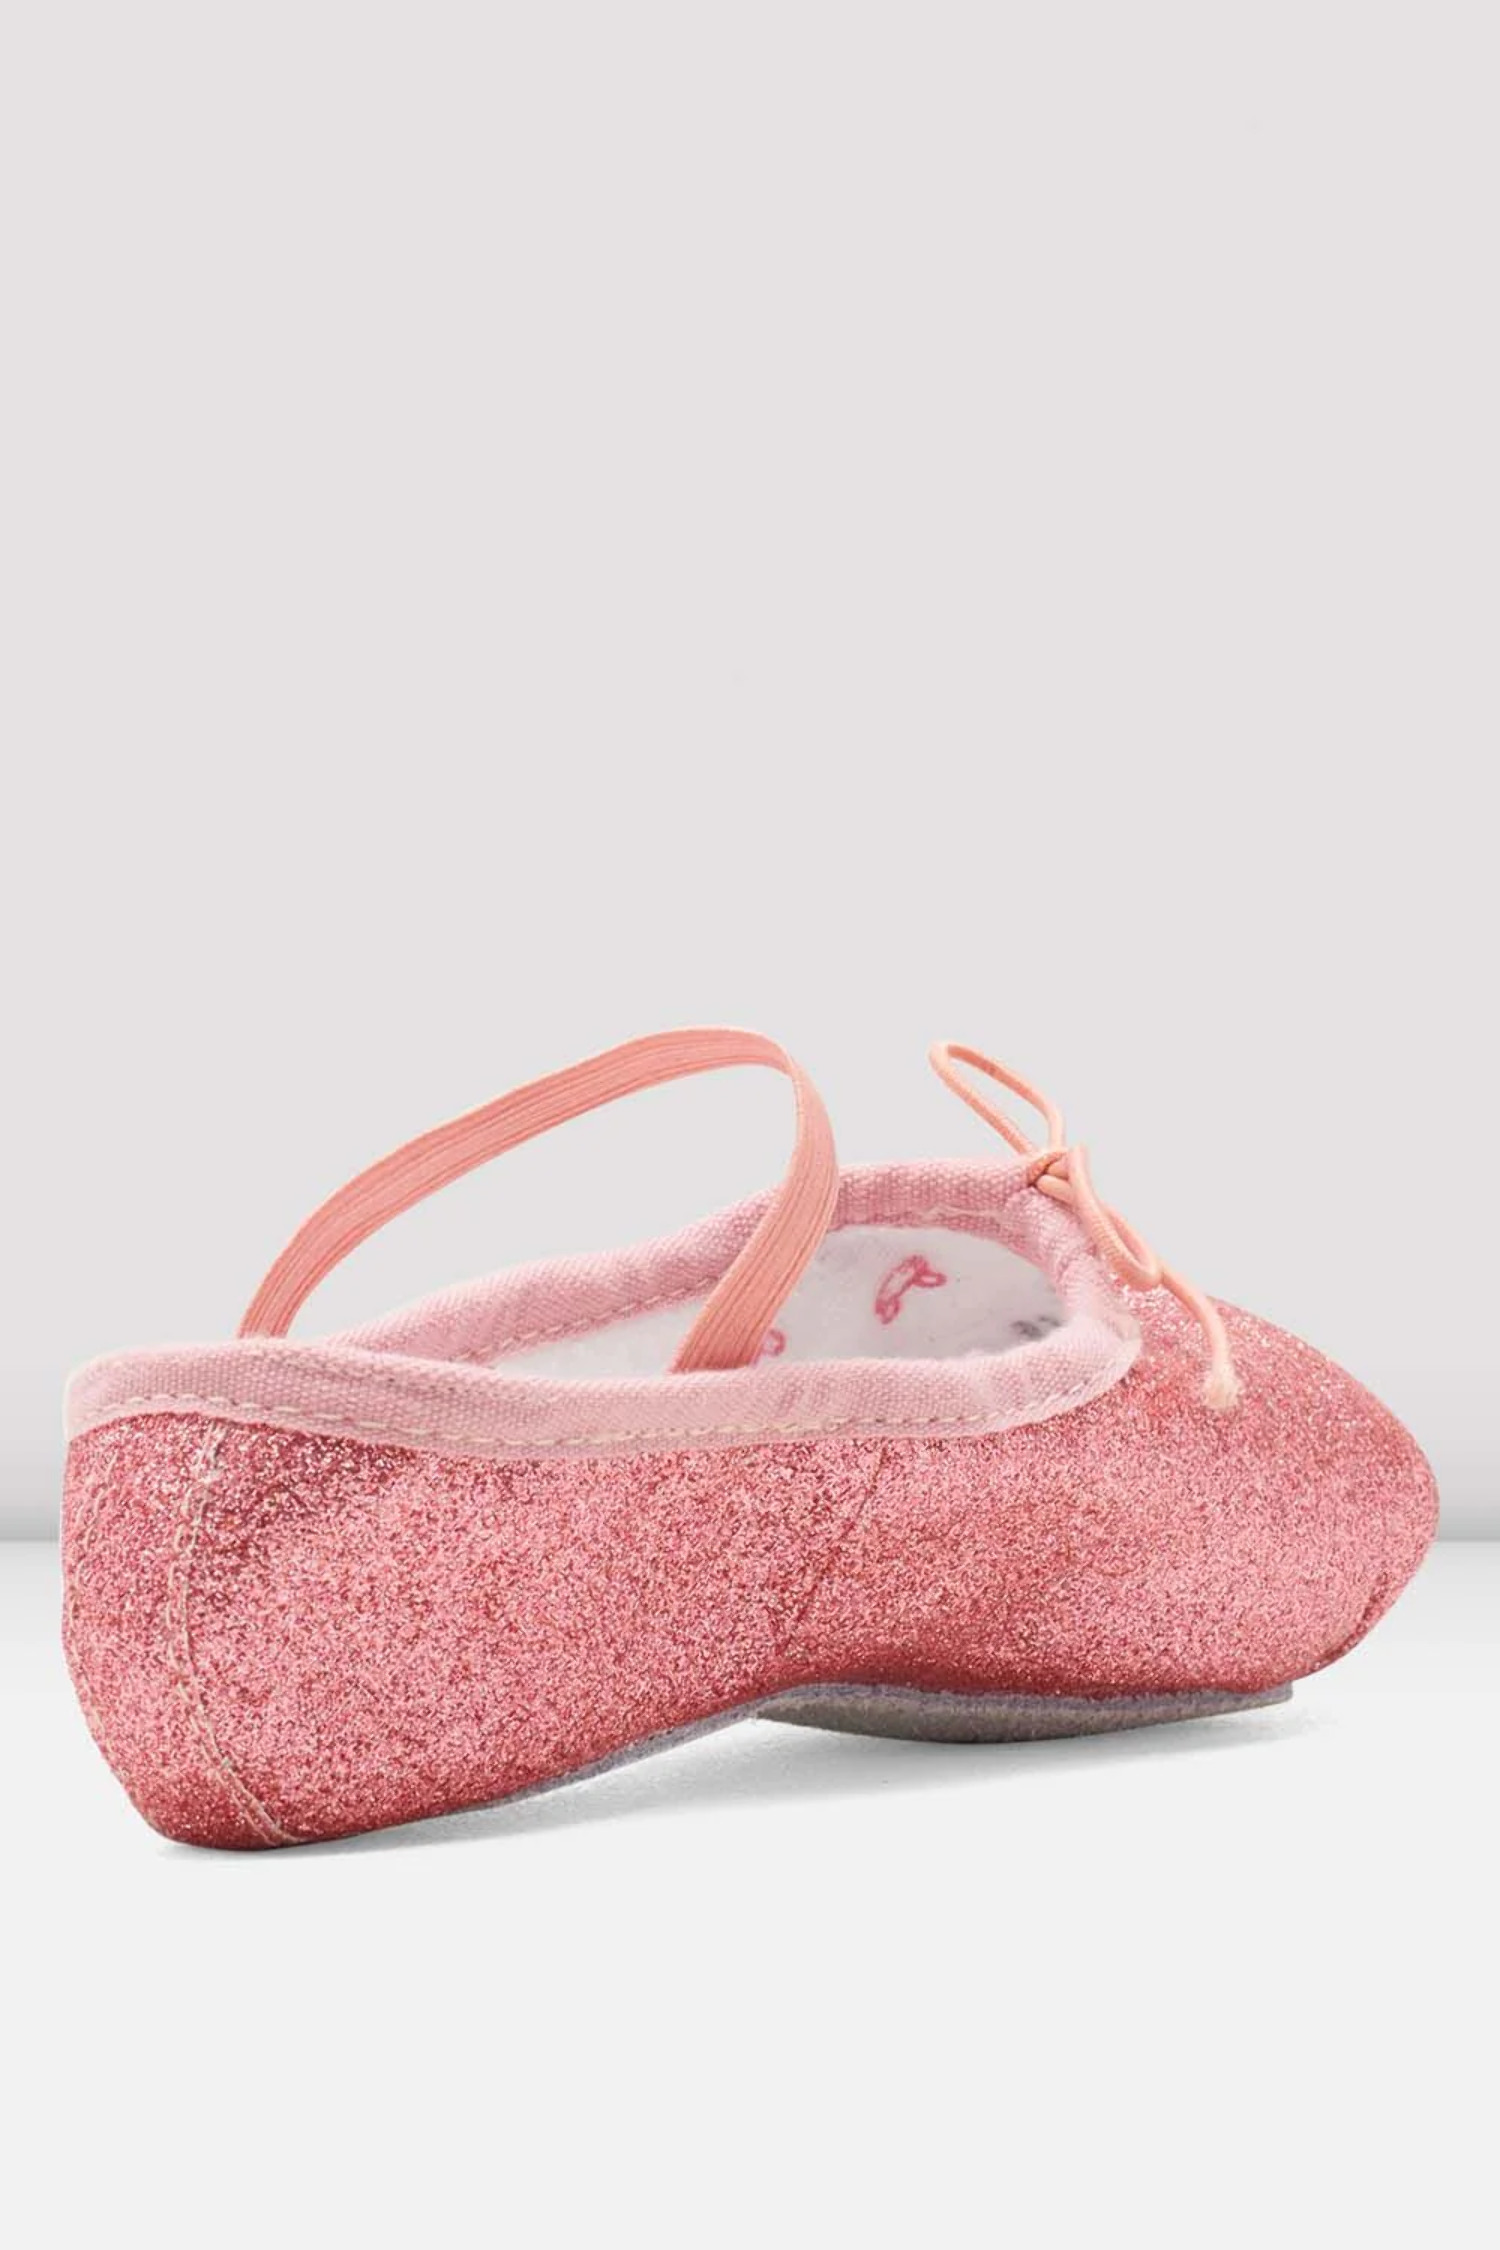 BLOCH Childrens Glitterdust Ballet Shoes, Rose - image 4 of 9